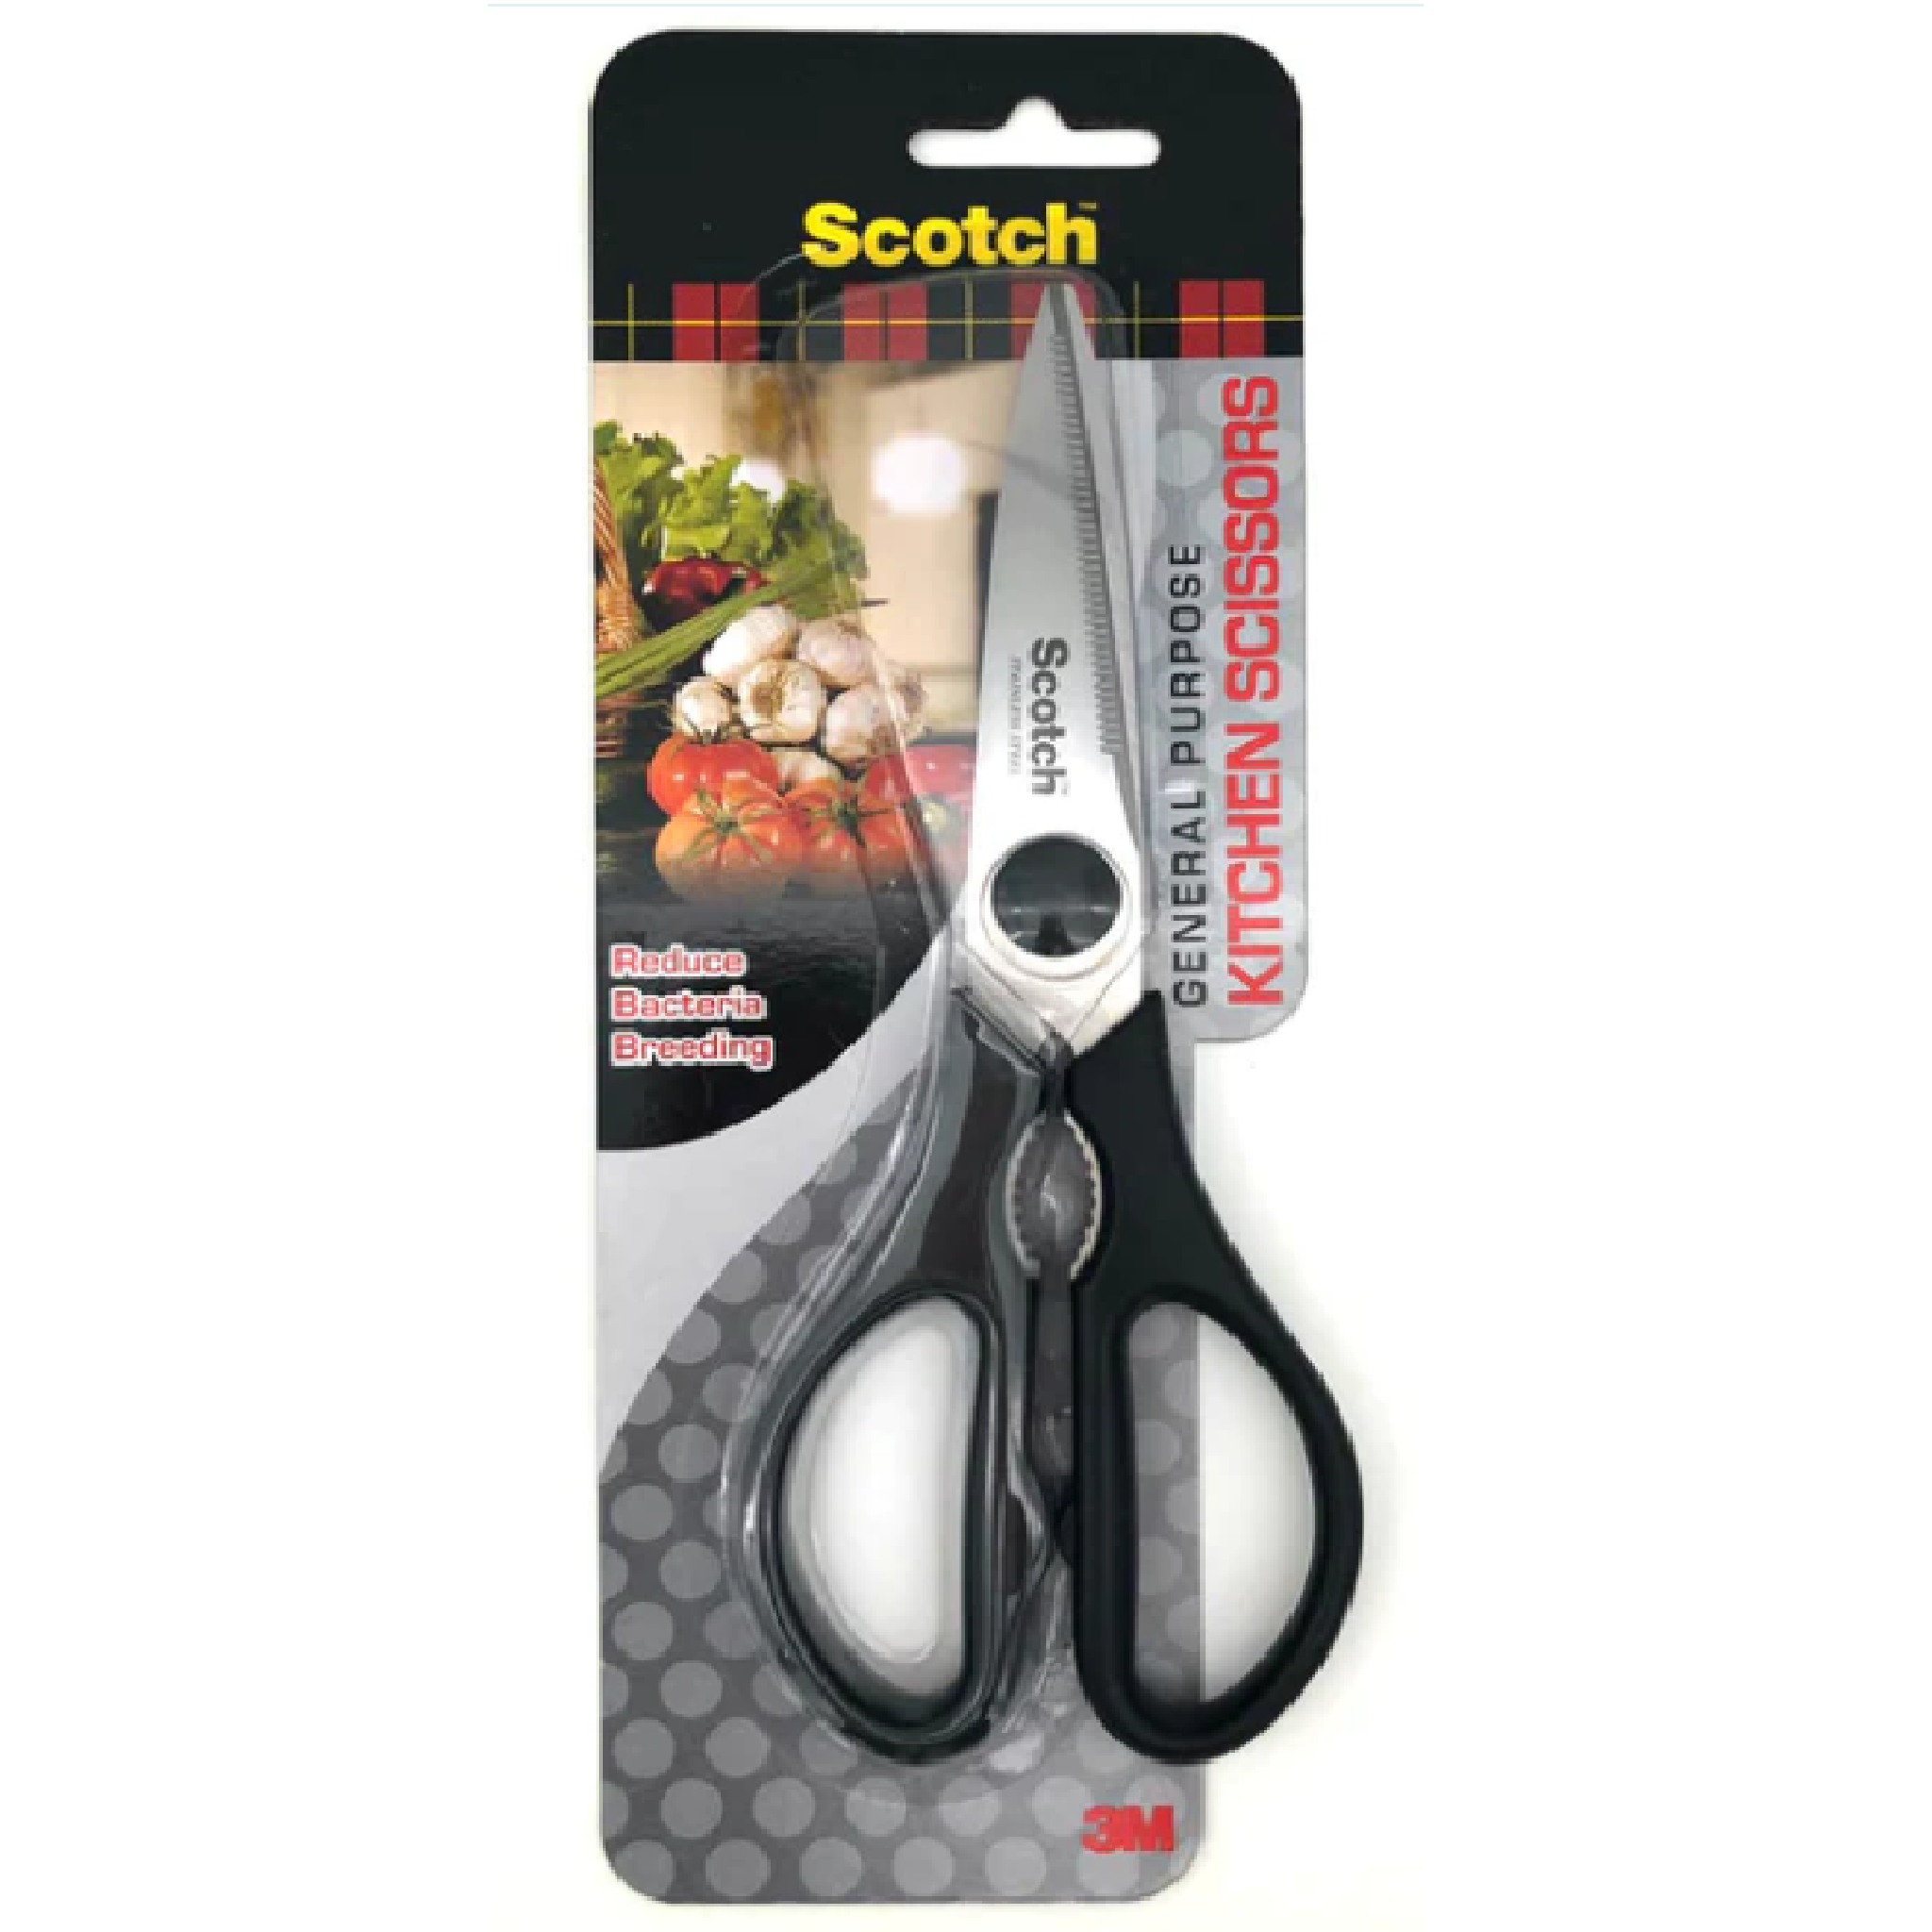 3M SCOTCH Kitchen Scissors GENERAL PURPOSE Black